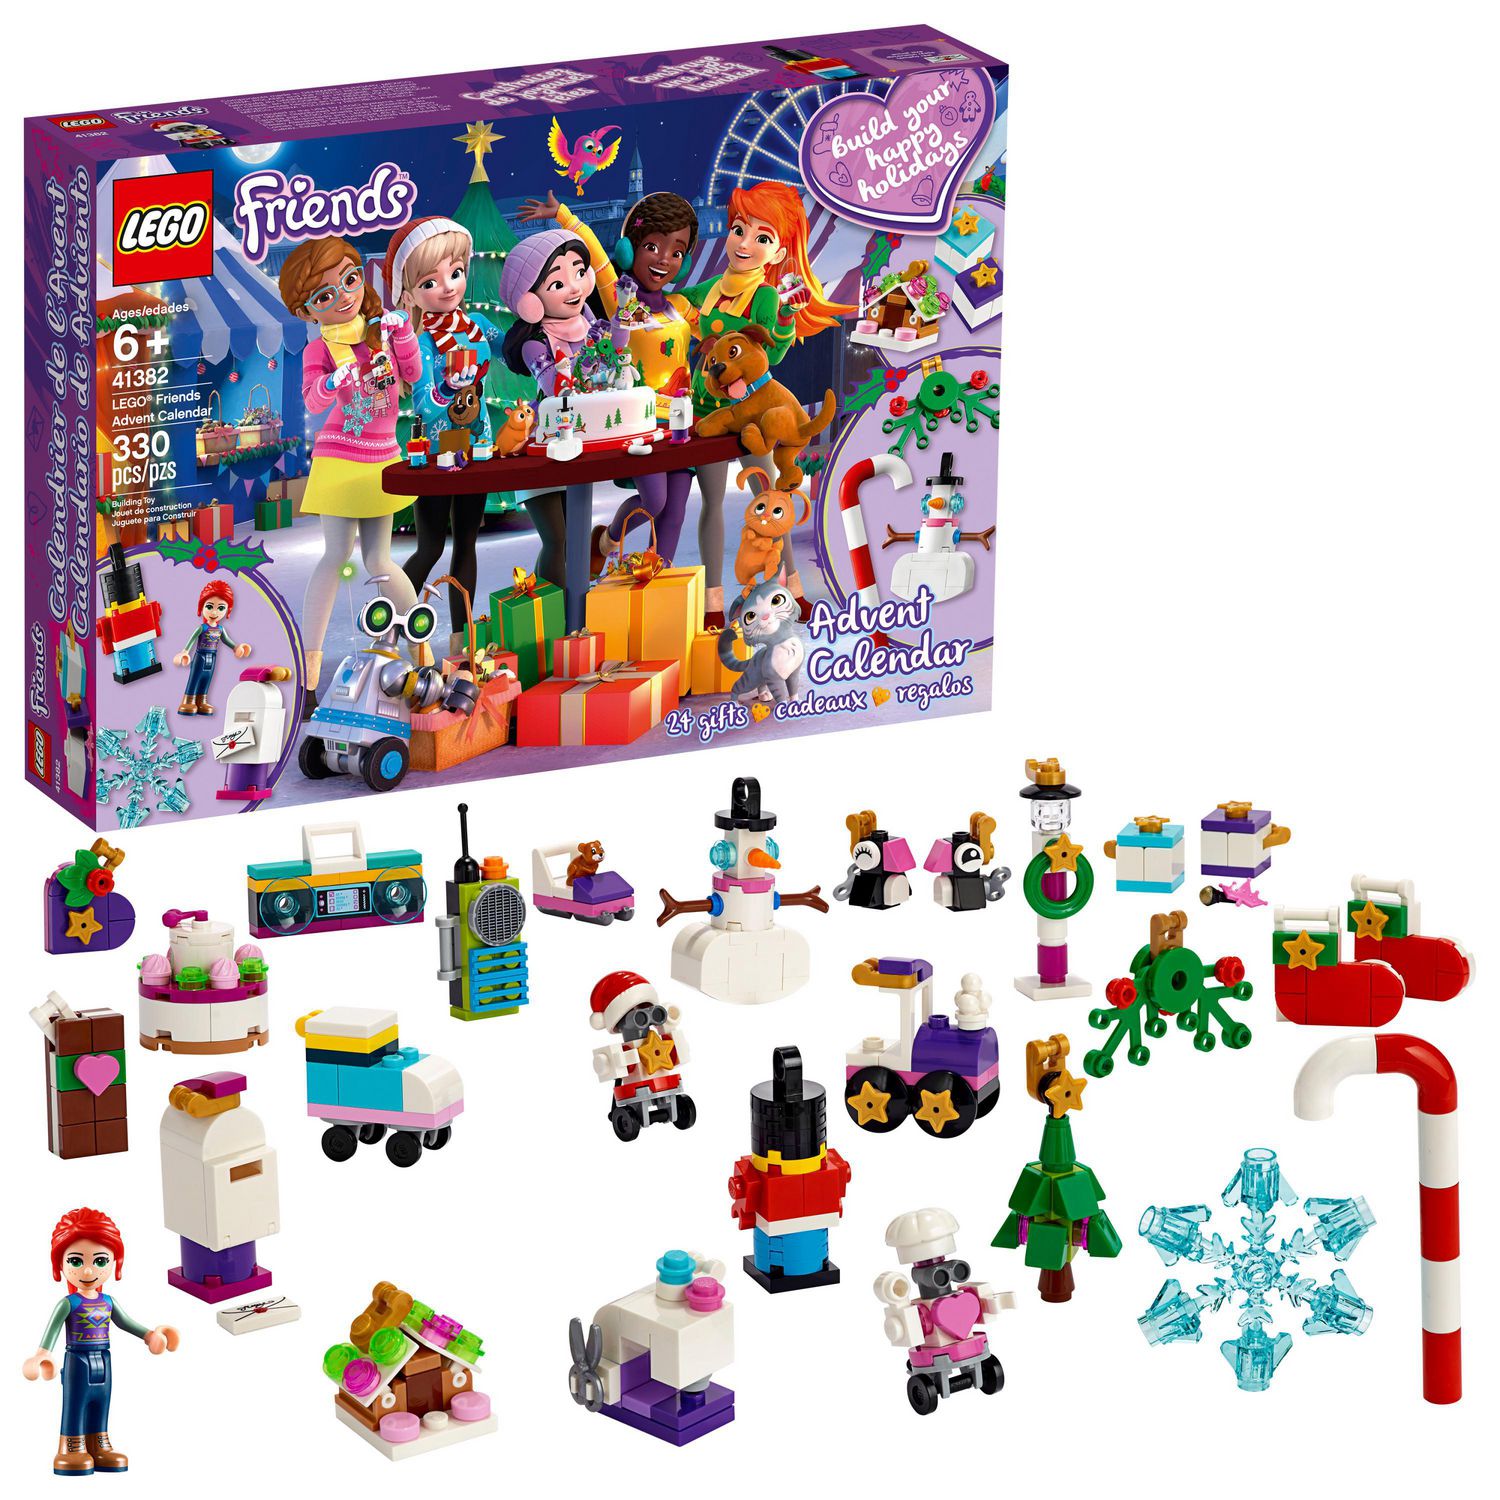 LEGO Friends Advent Calendar 41382 Toy Building Kit (330 Piece